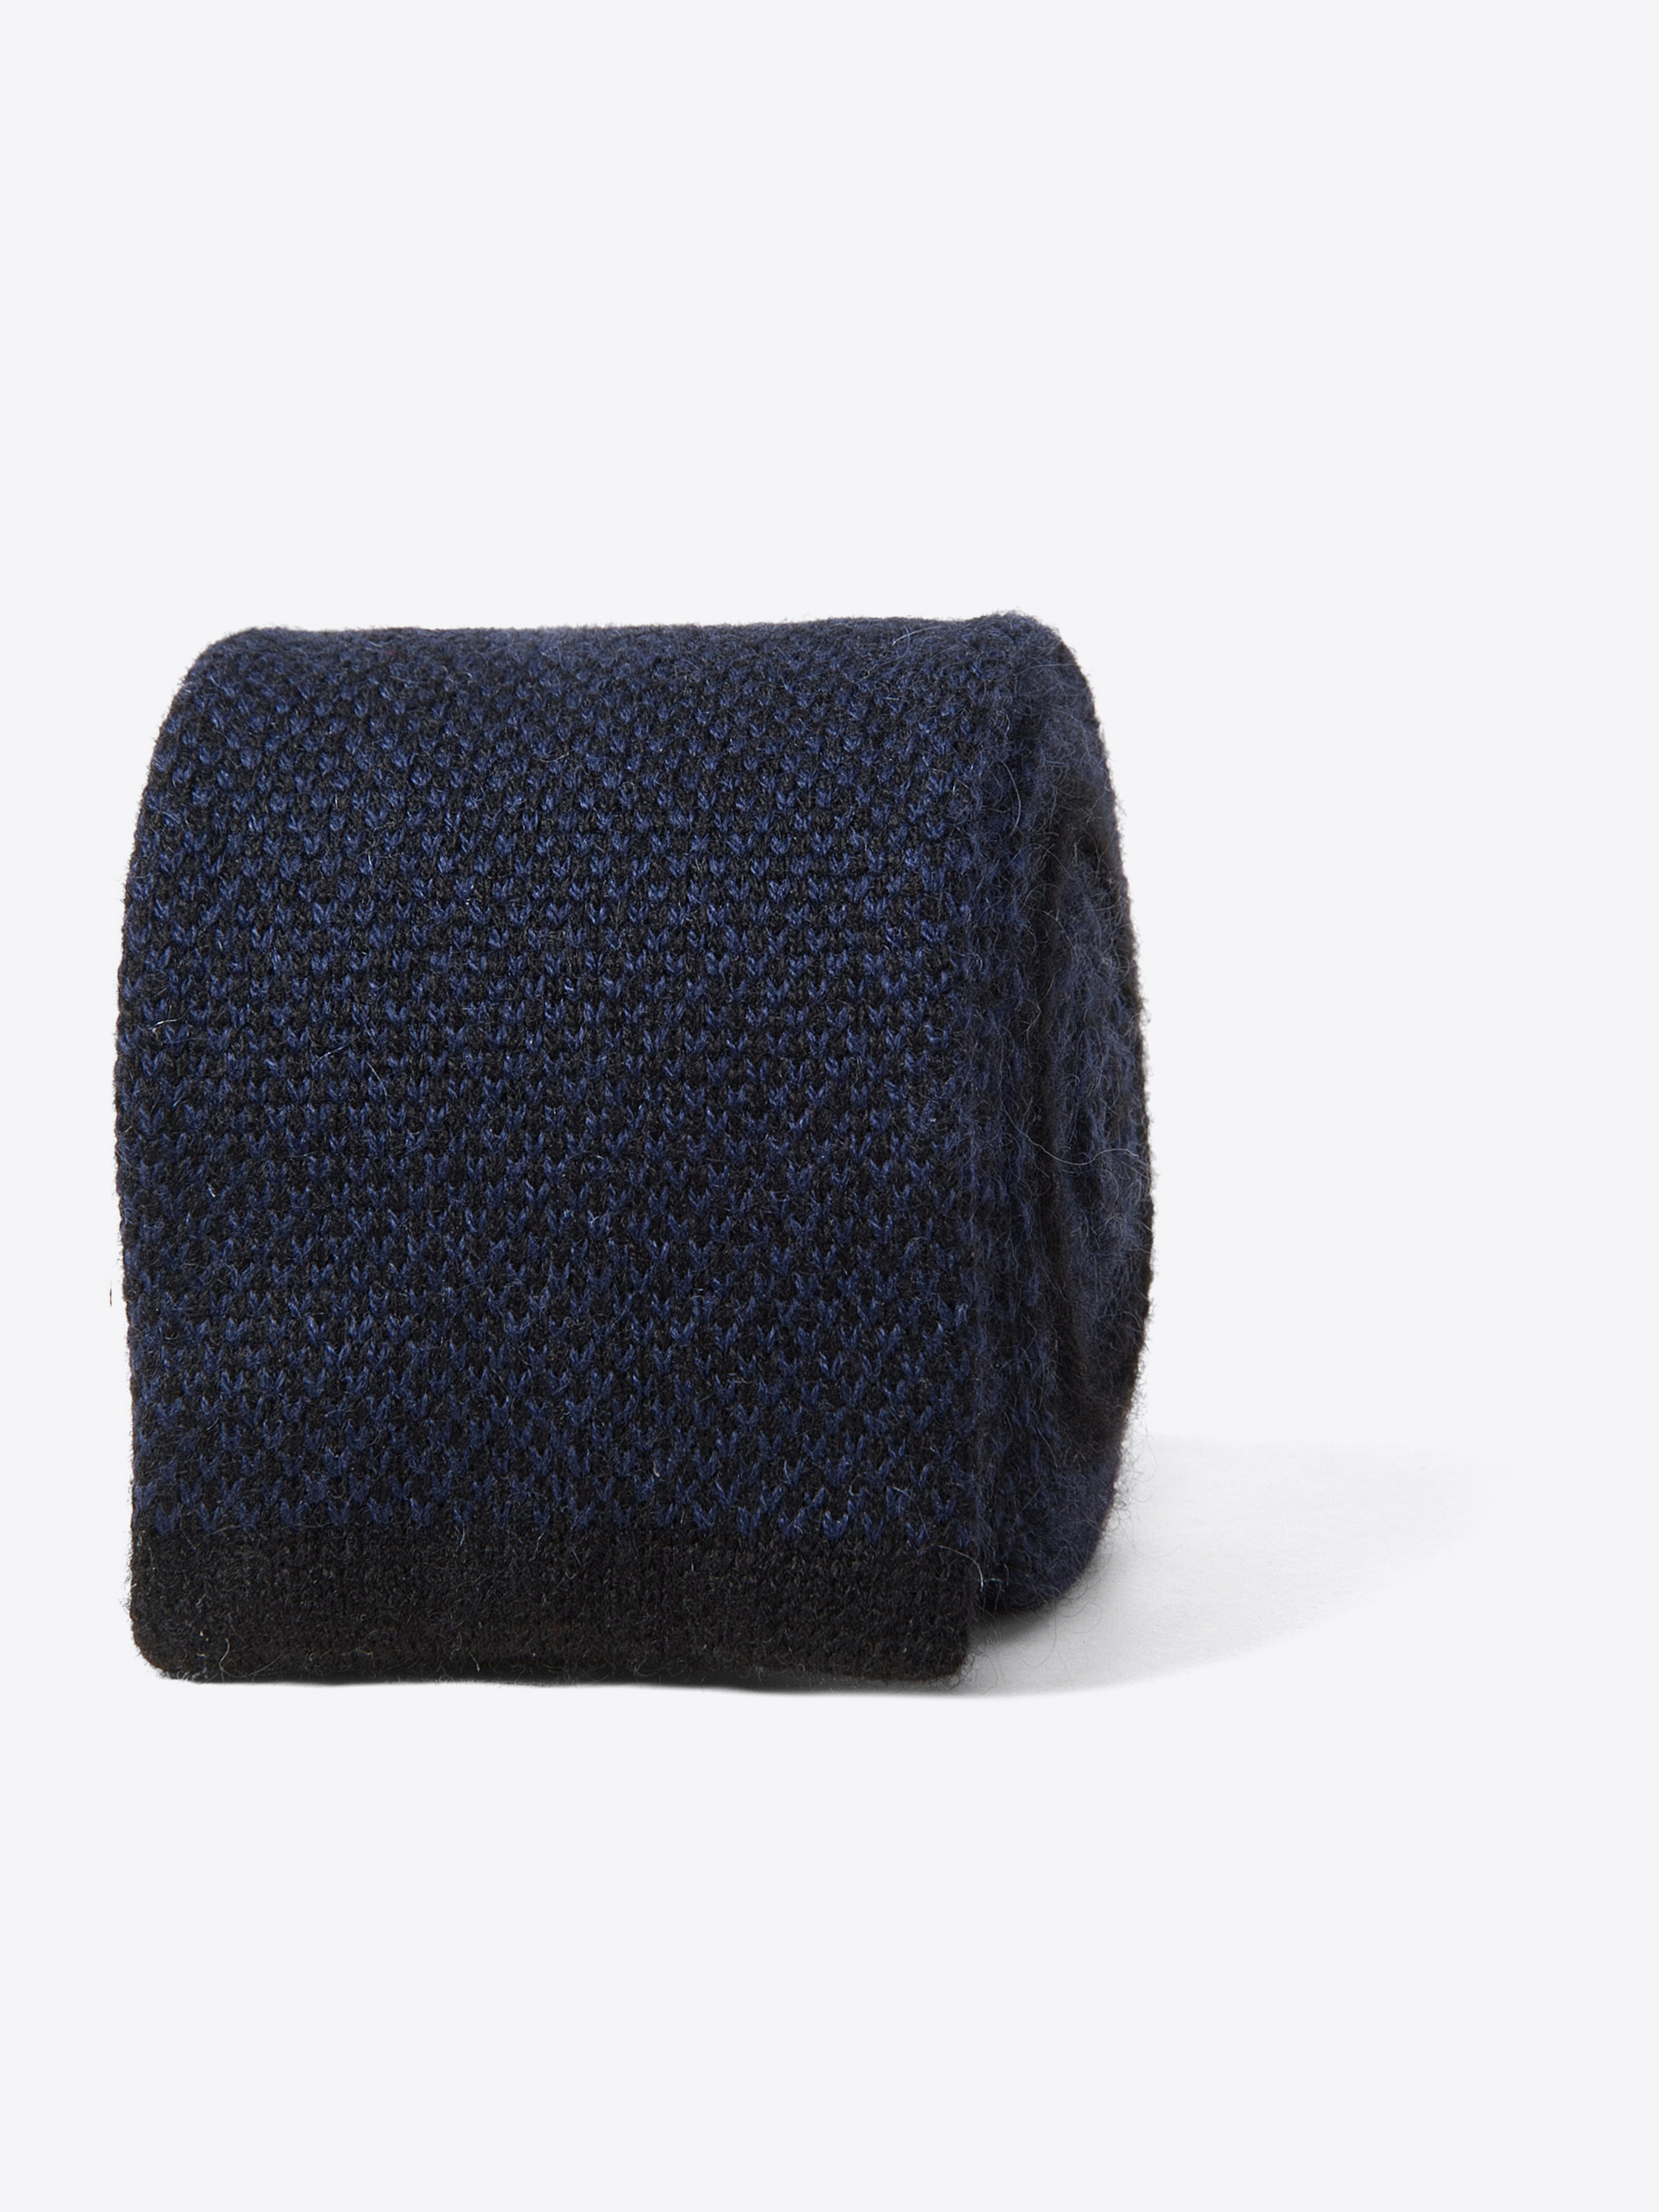 Zoom Image of Navy Birdseye Cashmere Knit Tie